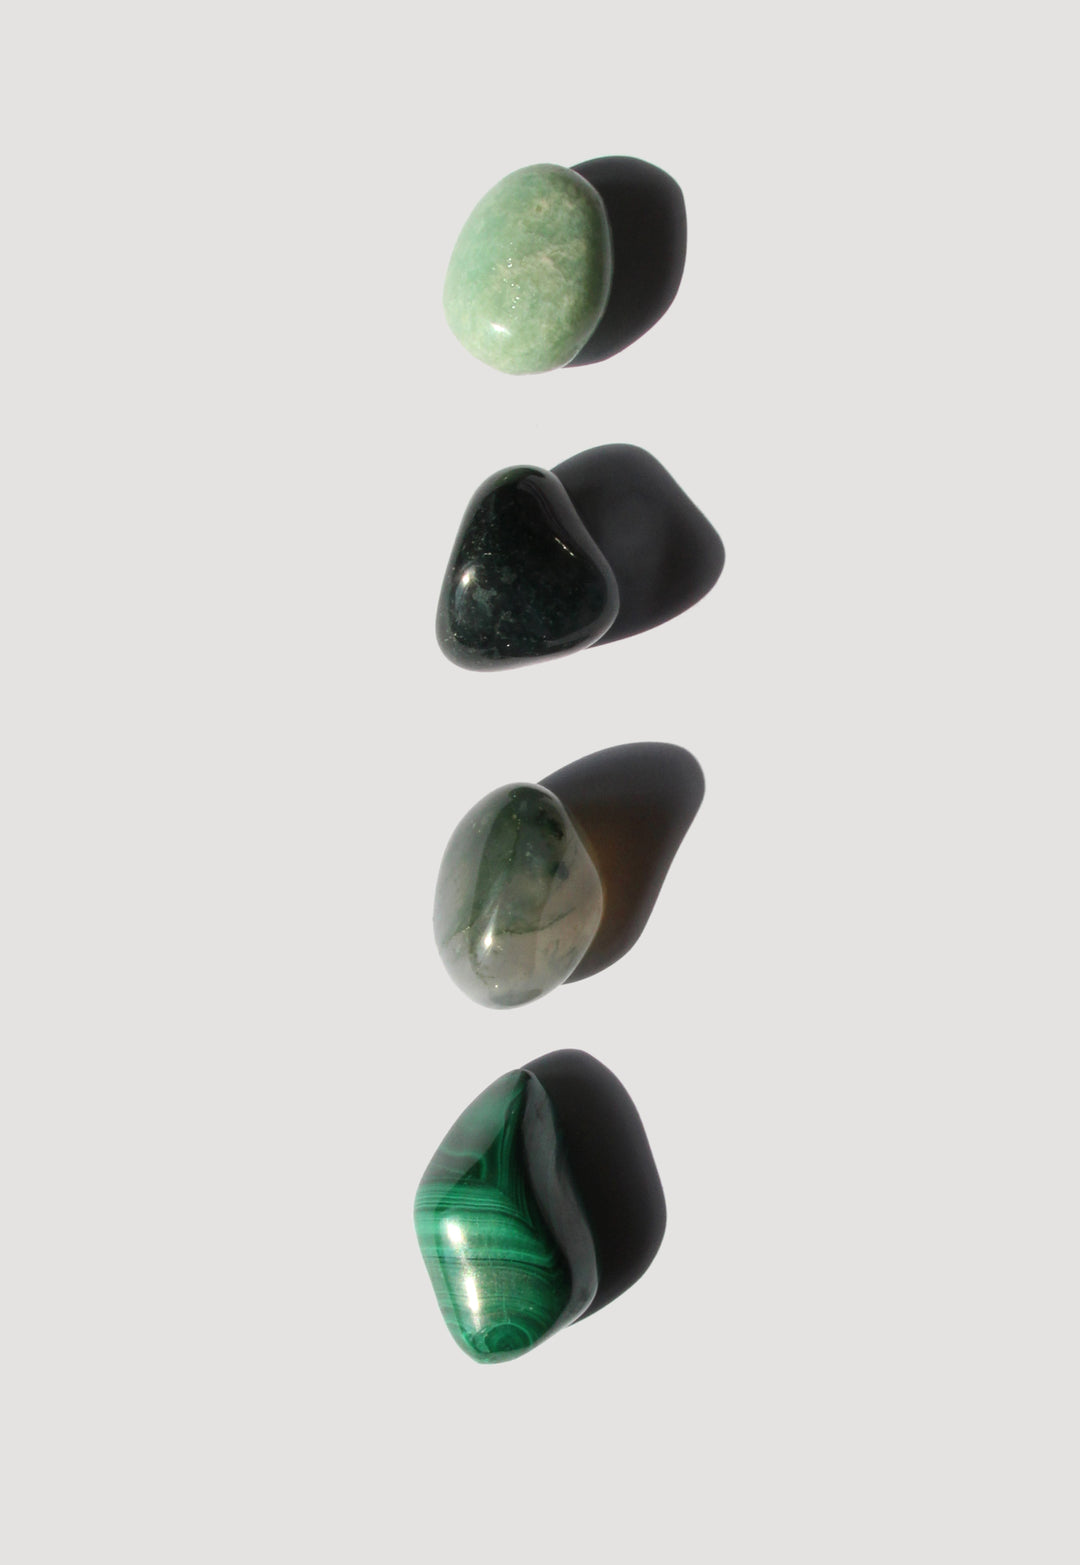 Coffret pierres protectrices abondance chance fluorite malachite agate mousse amazonite